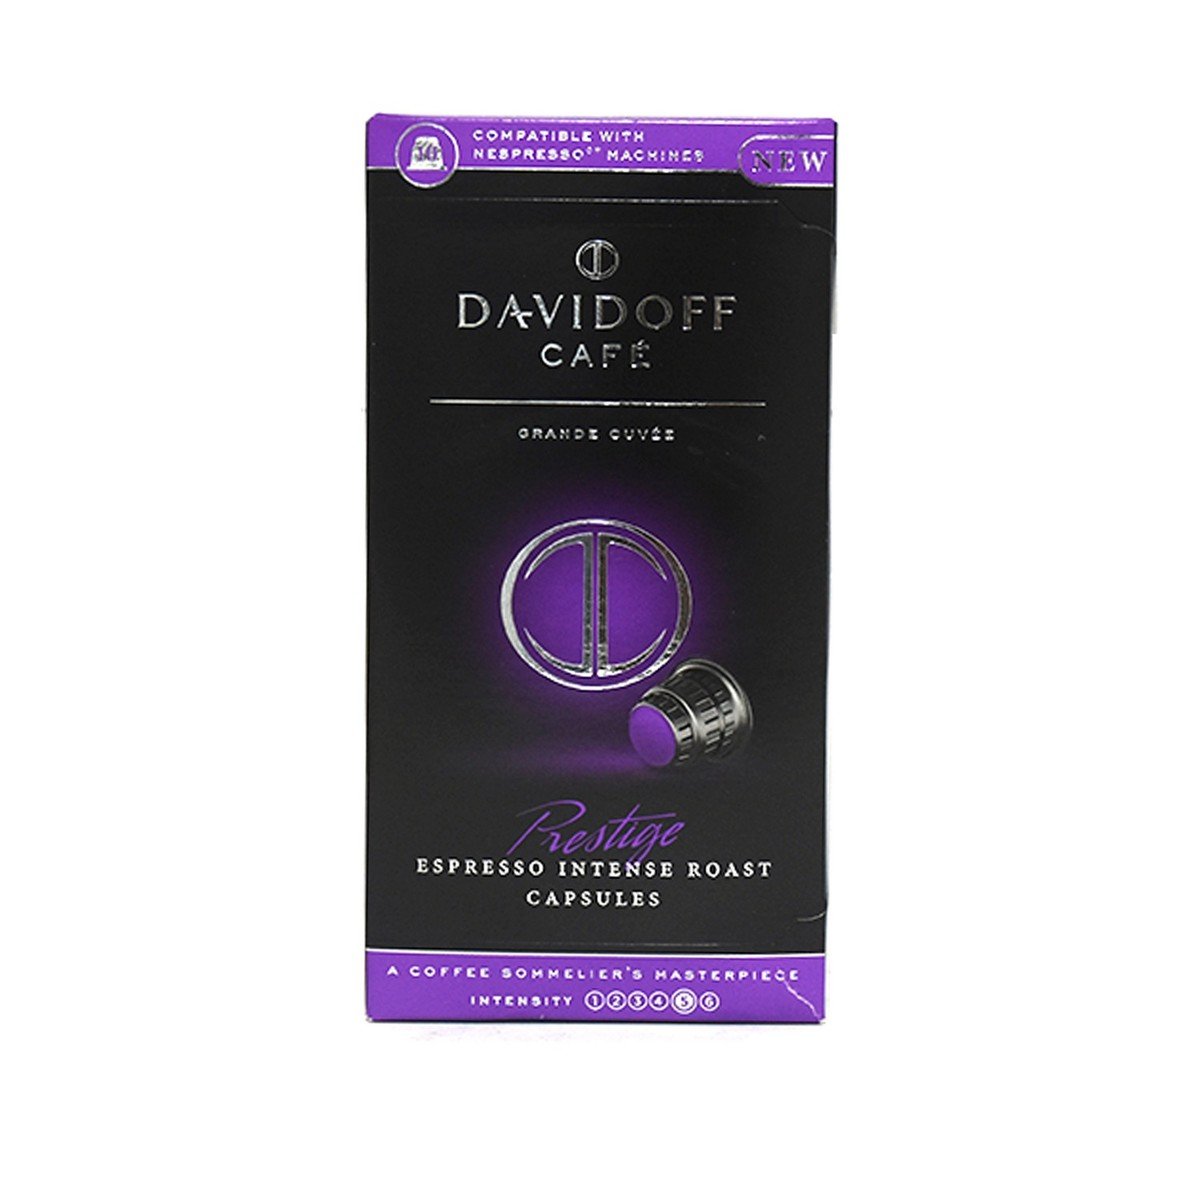 Davidoff Cafe Prestige Espresso Intense Roast Capsules 55g